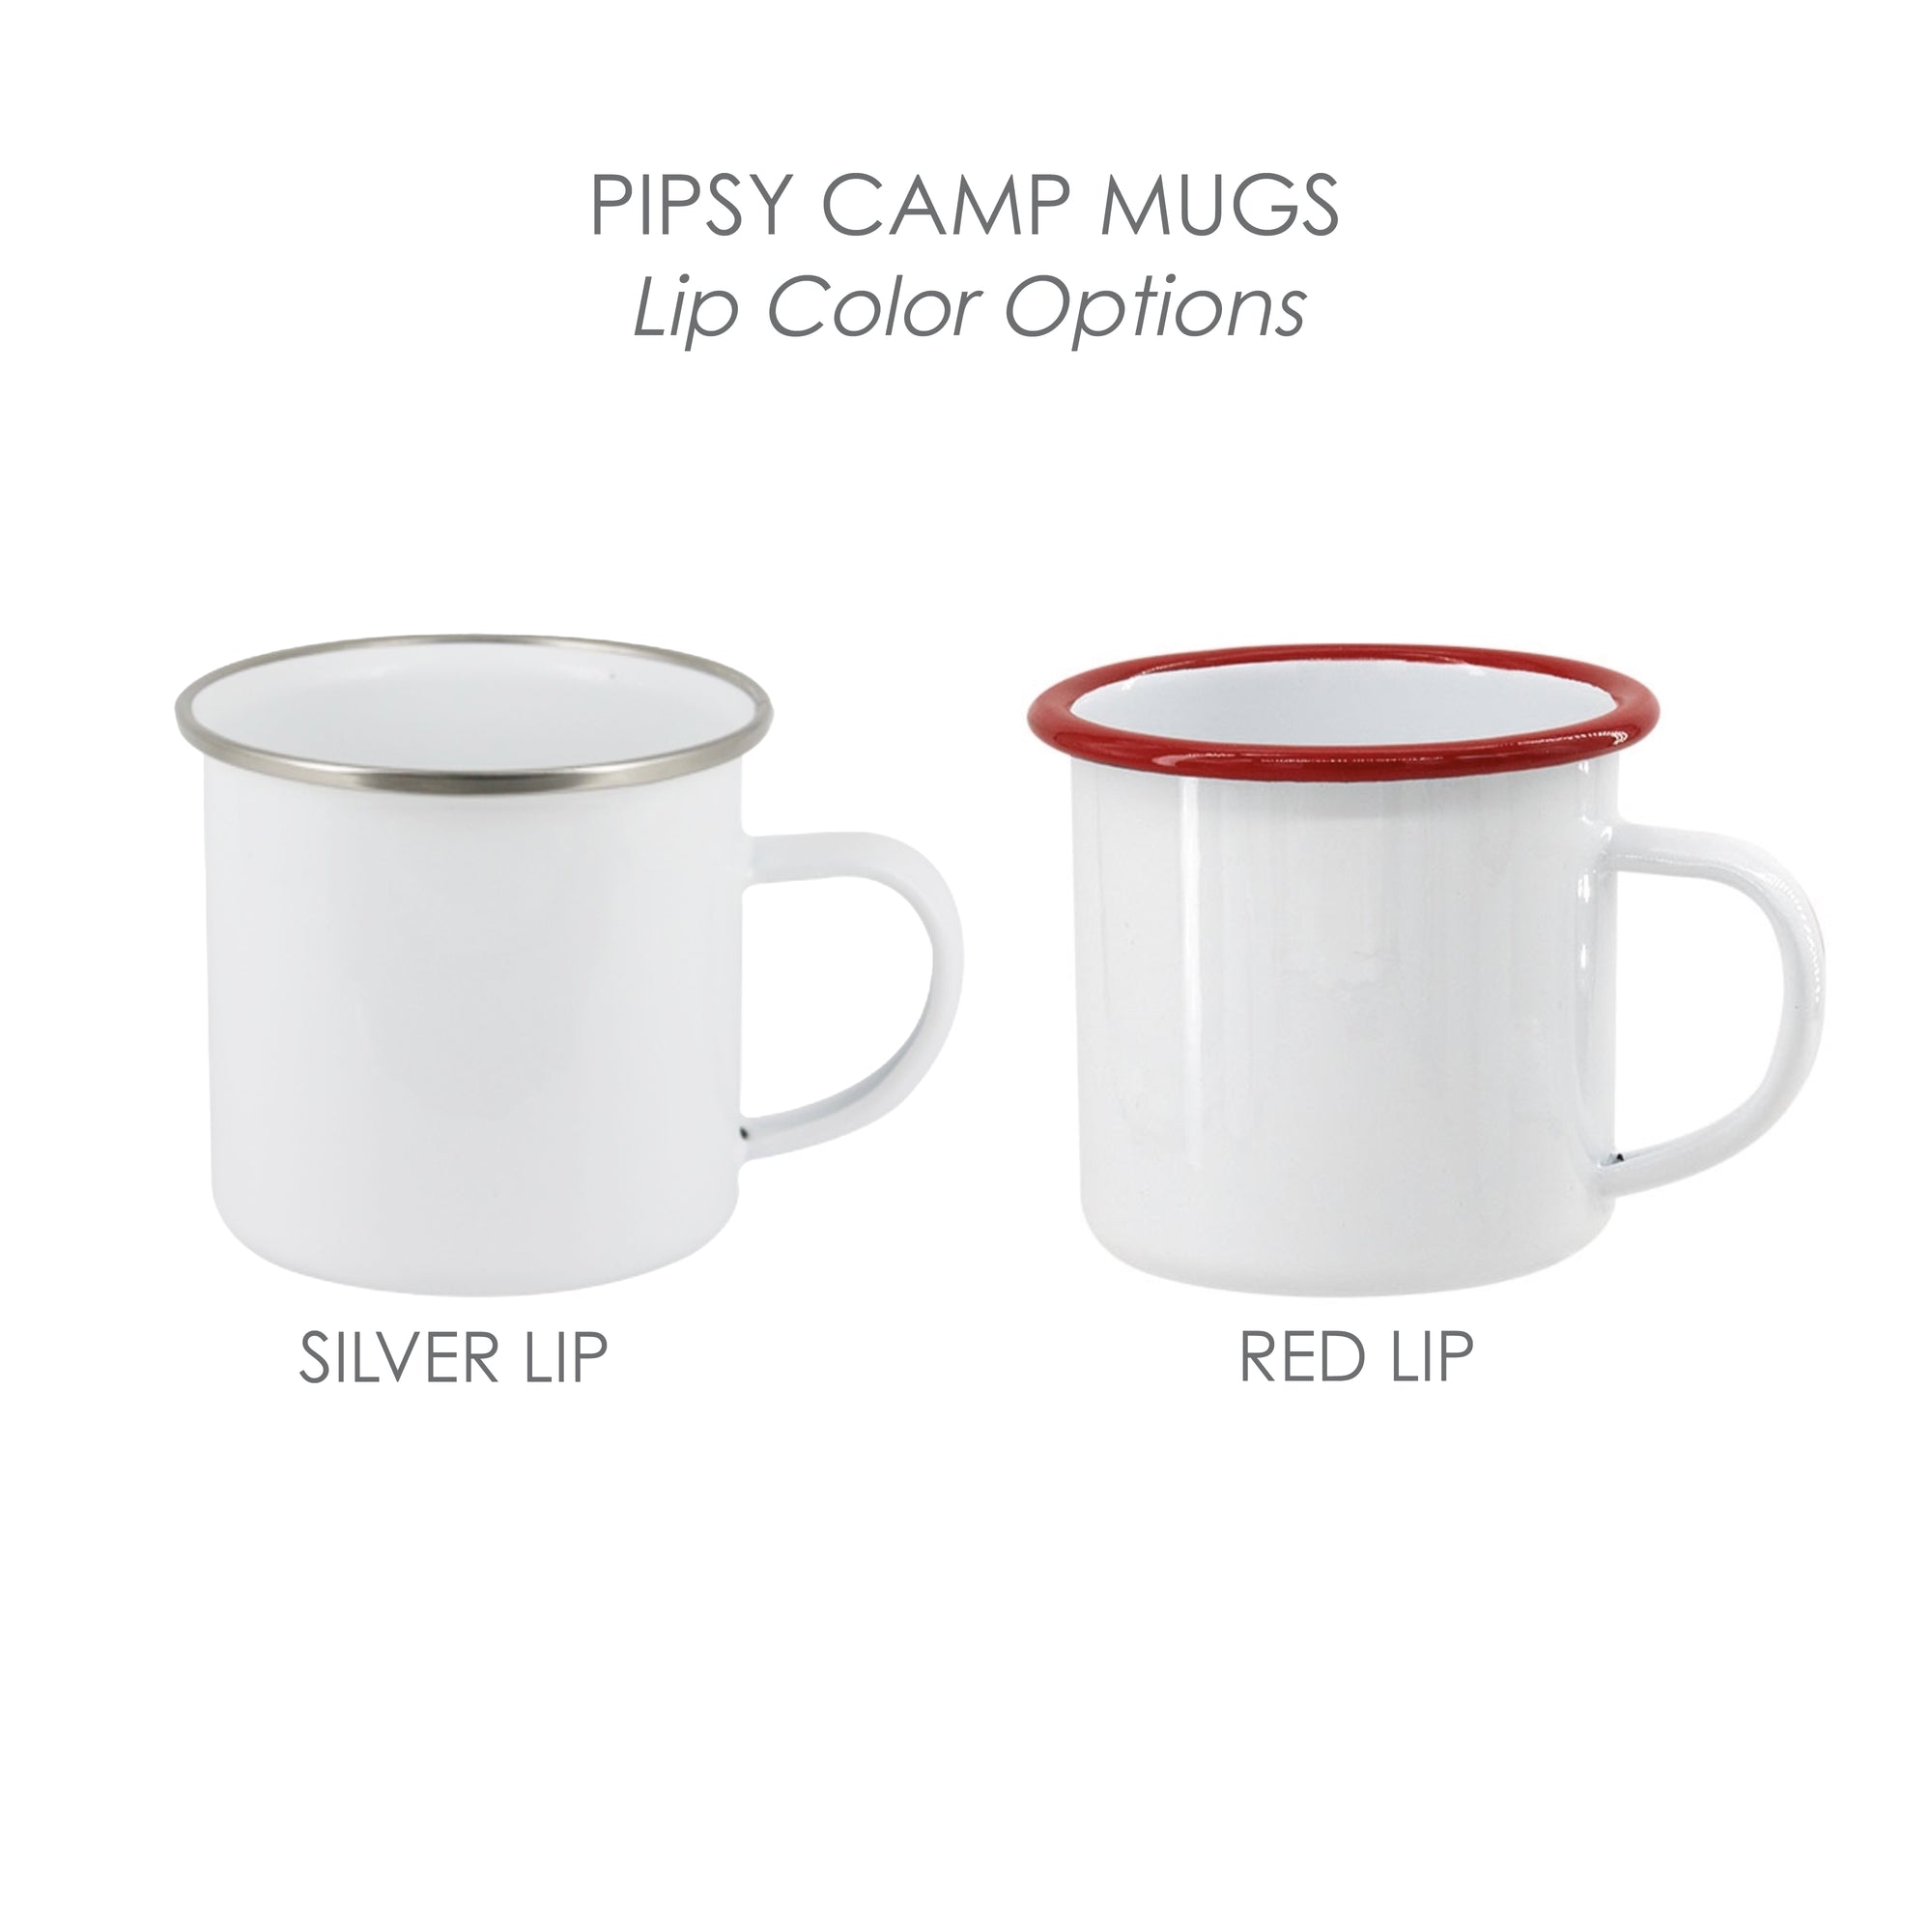 Camp Mug Options - Silver or Red Lip